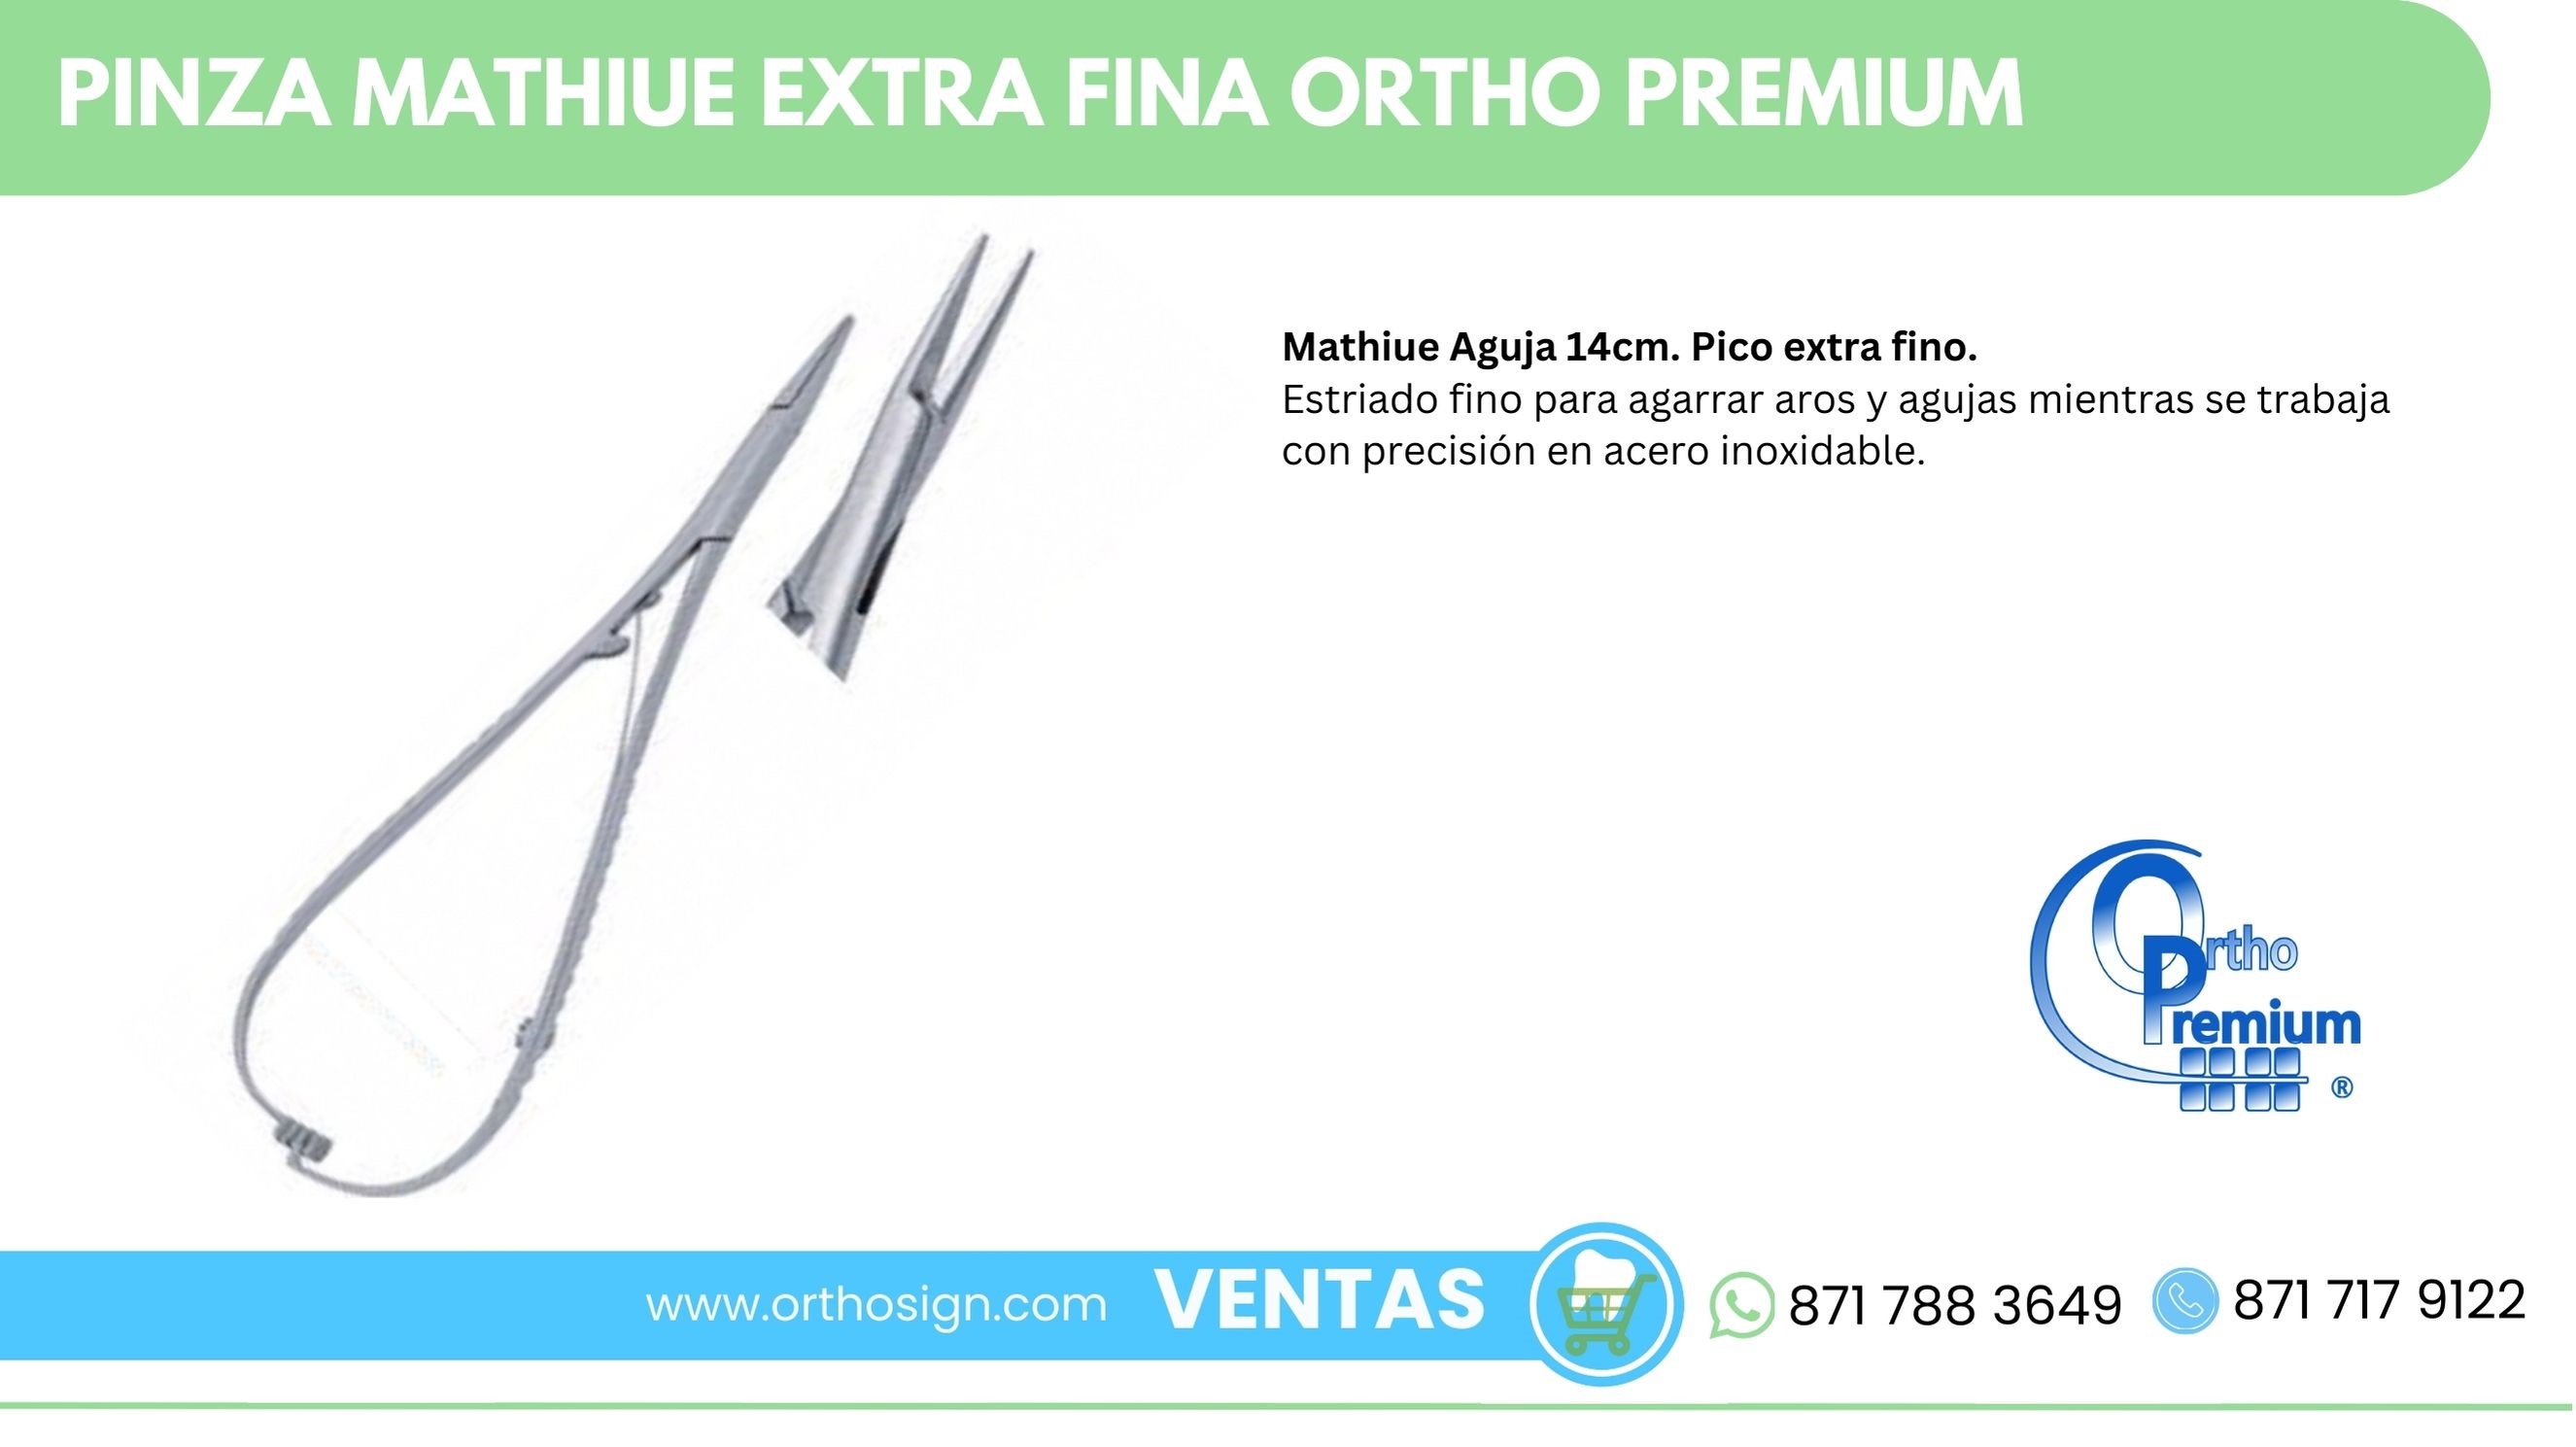 Pinza Mathiue Extra Fina Ortho Premium ORTHOSIGN